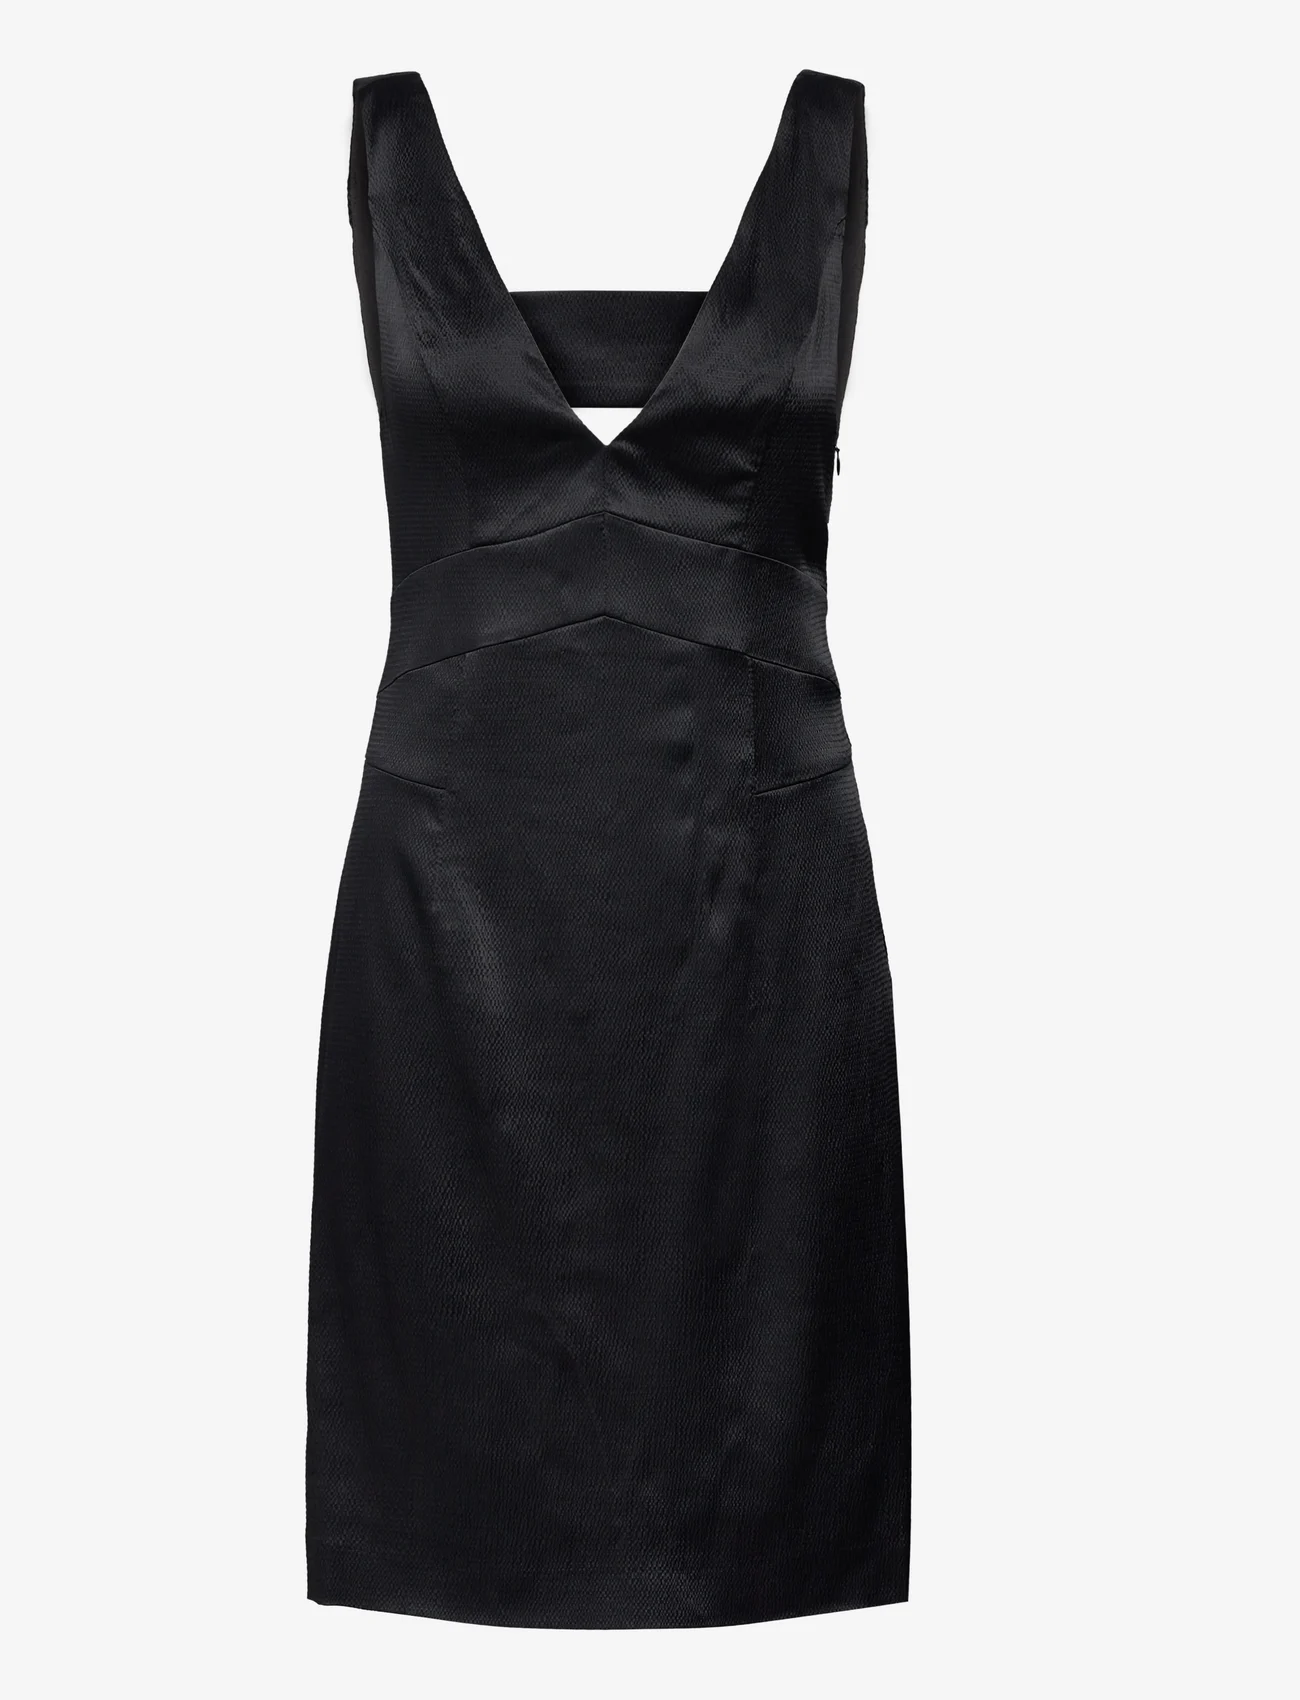 IVY OAK - Long Mini Length Strap Dress - etuikleider - black - 0